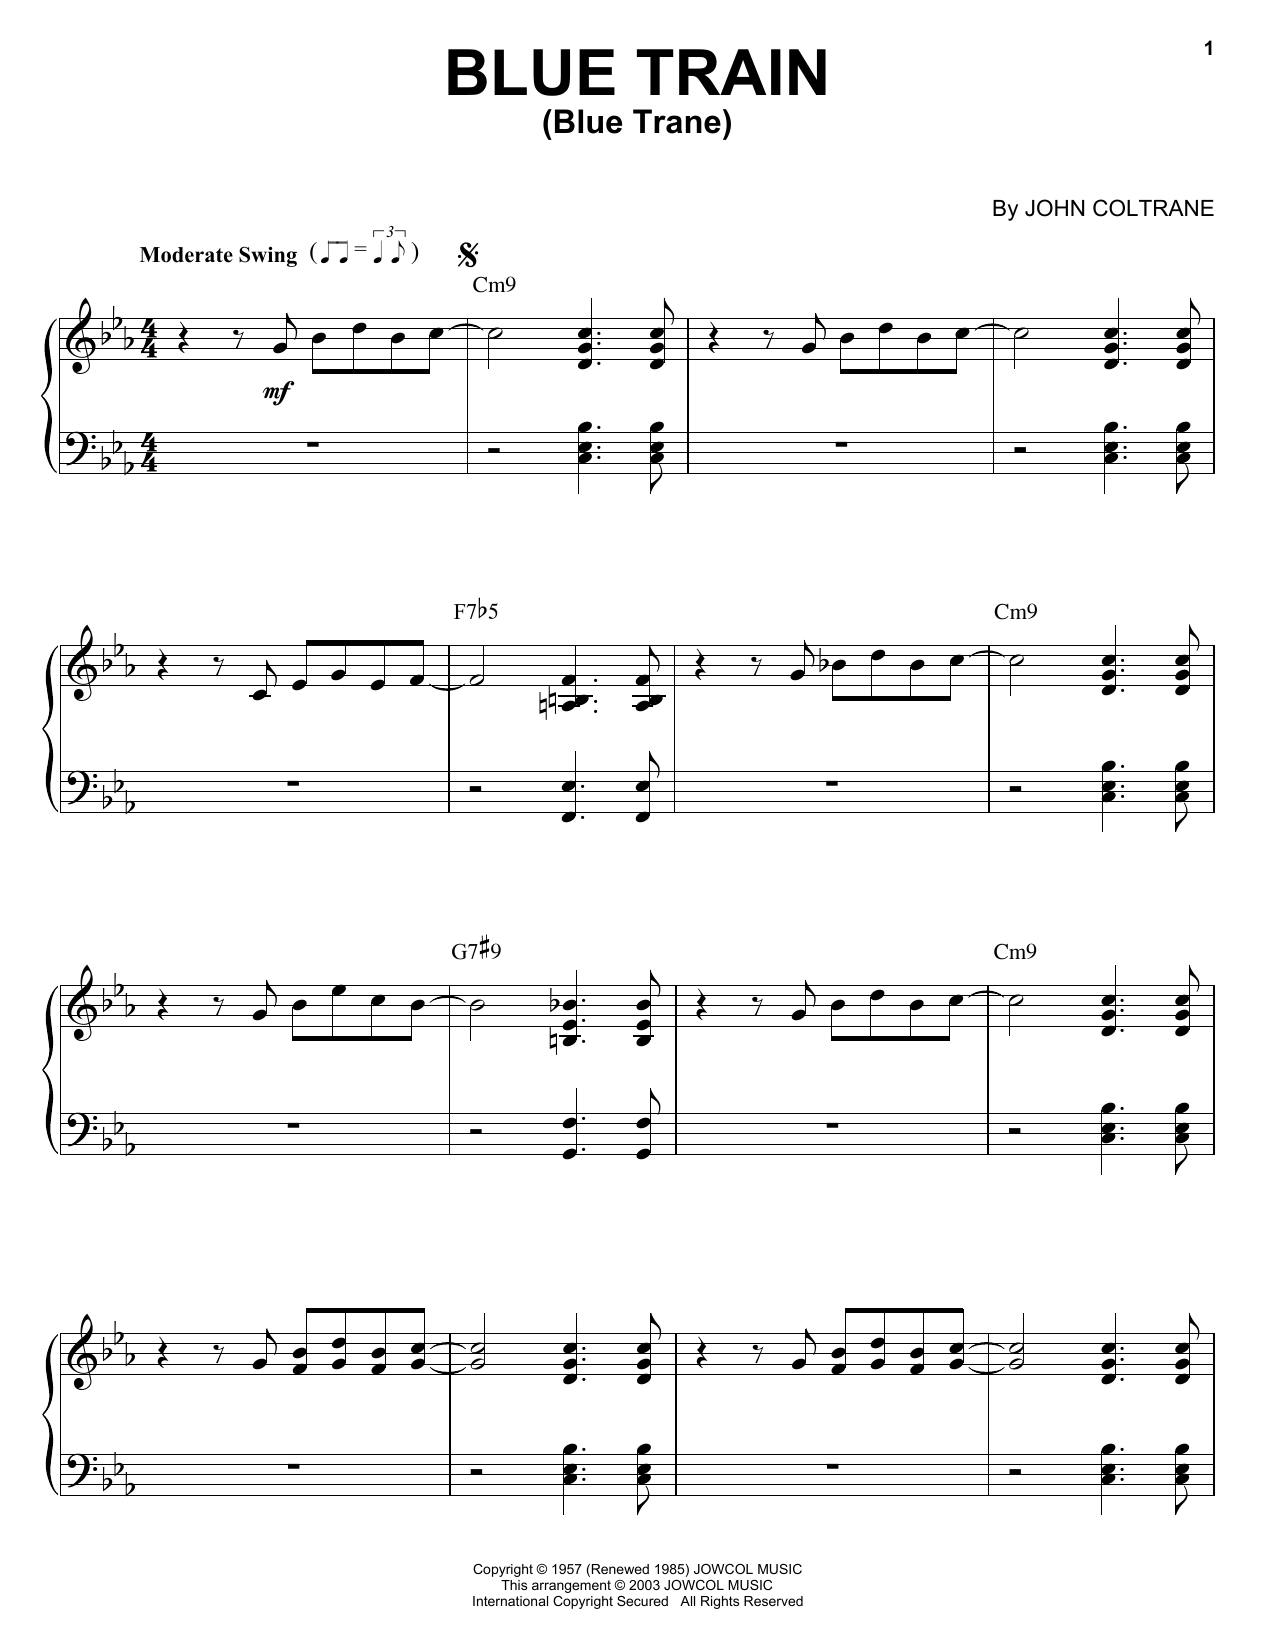 John Coltrane Blue Train (Blue Trane) Sheet Music Notes & Chords for Real Book – Melody & Chords - Download or Print PDF